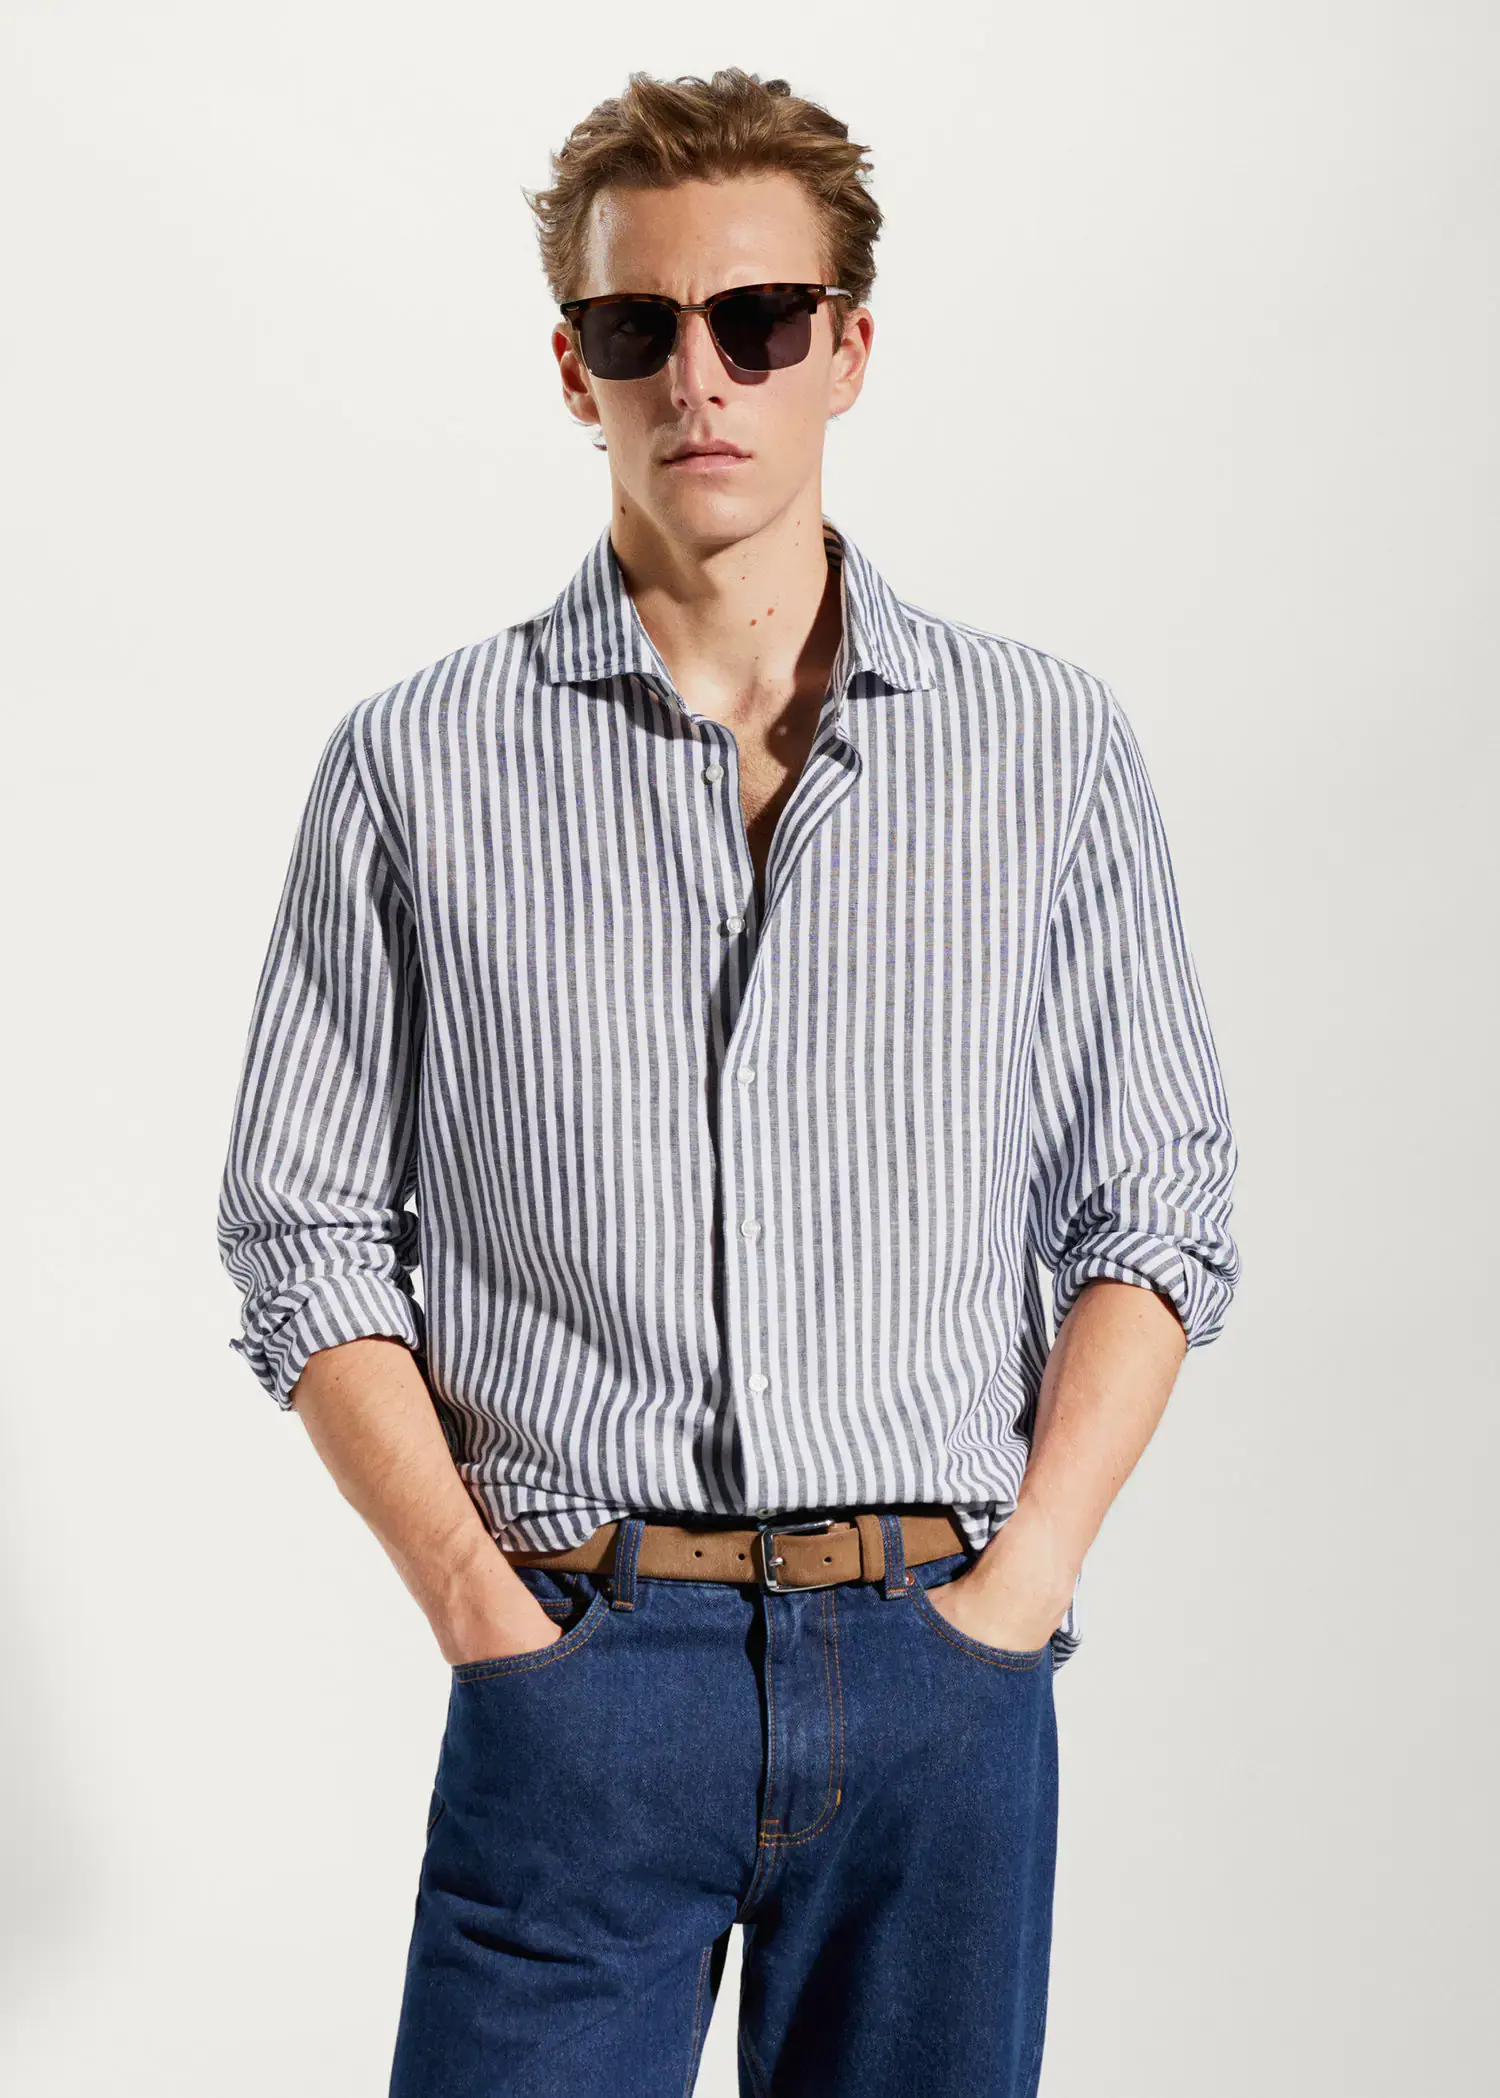 Mango Slim fit striped linen shirt. a man wearing sunglasses and a striped shirt. 